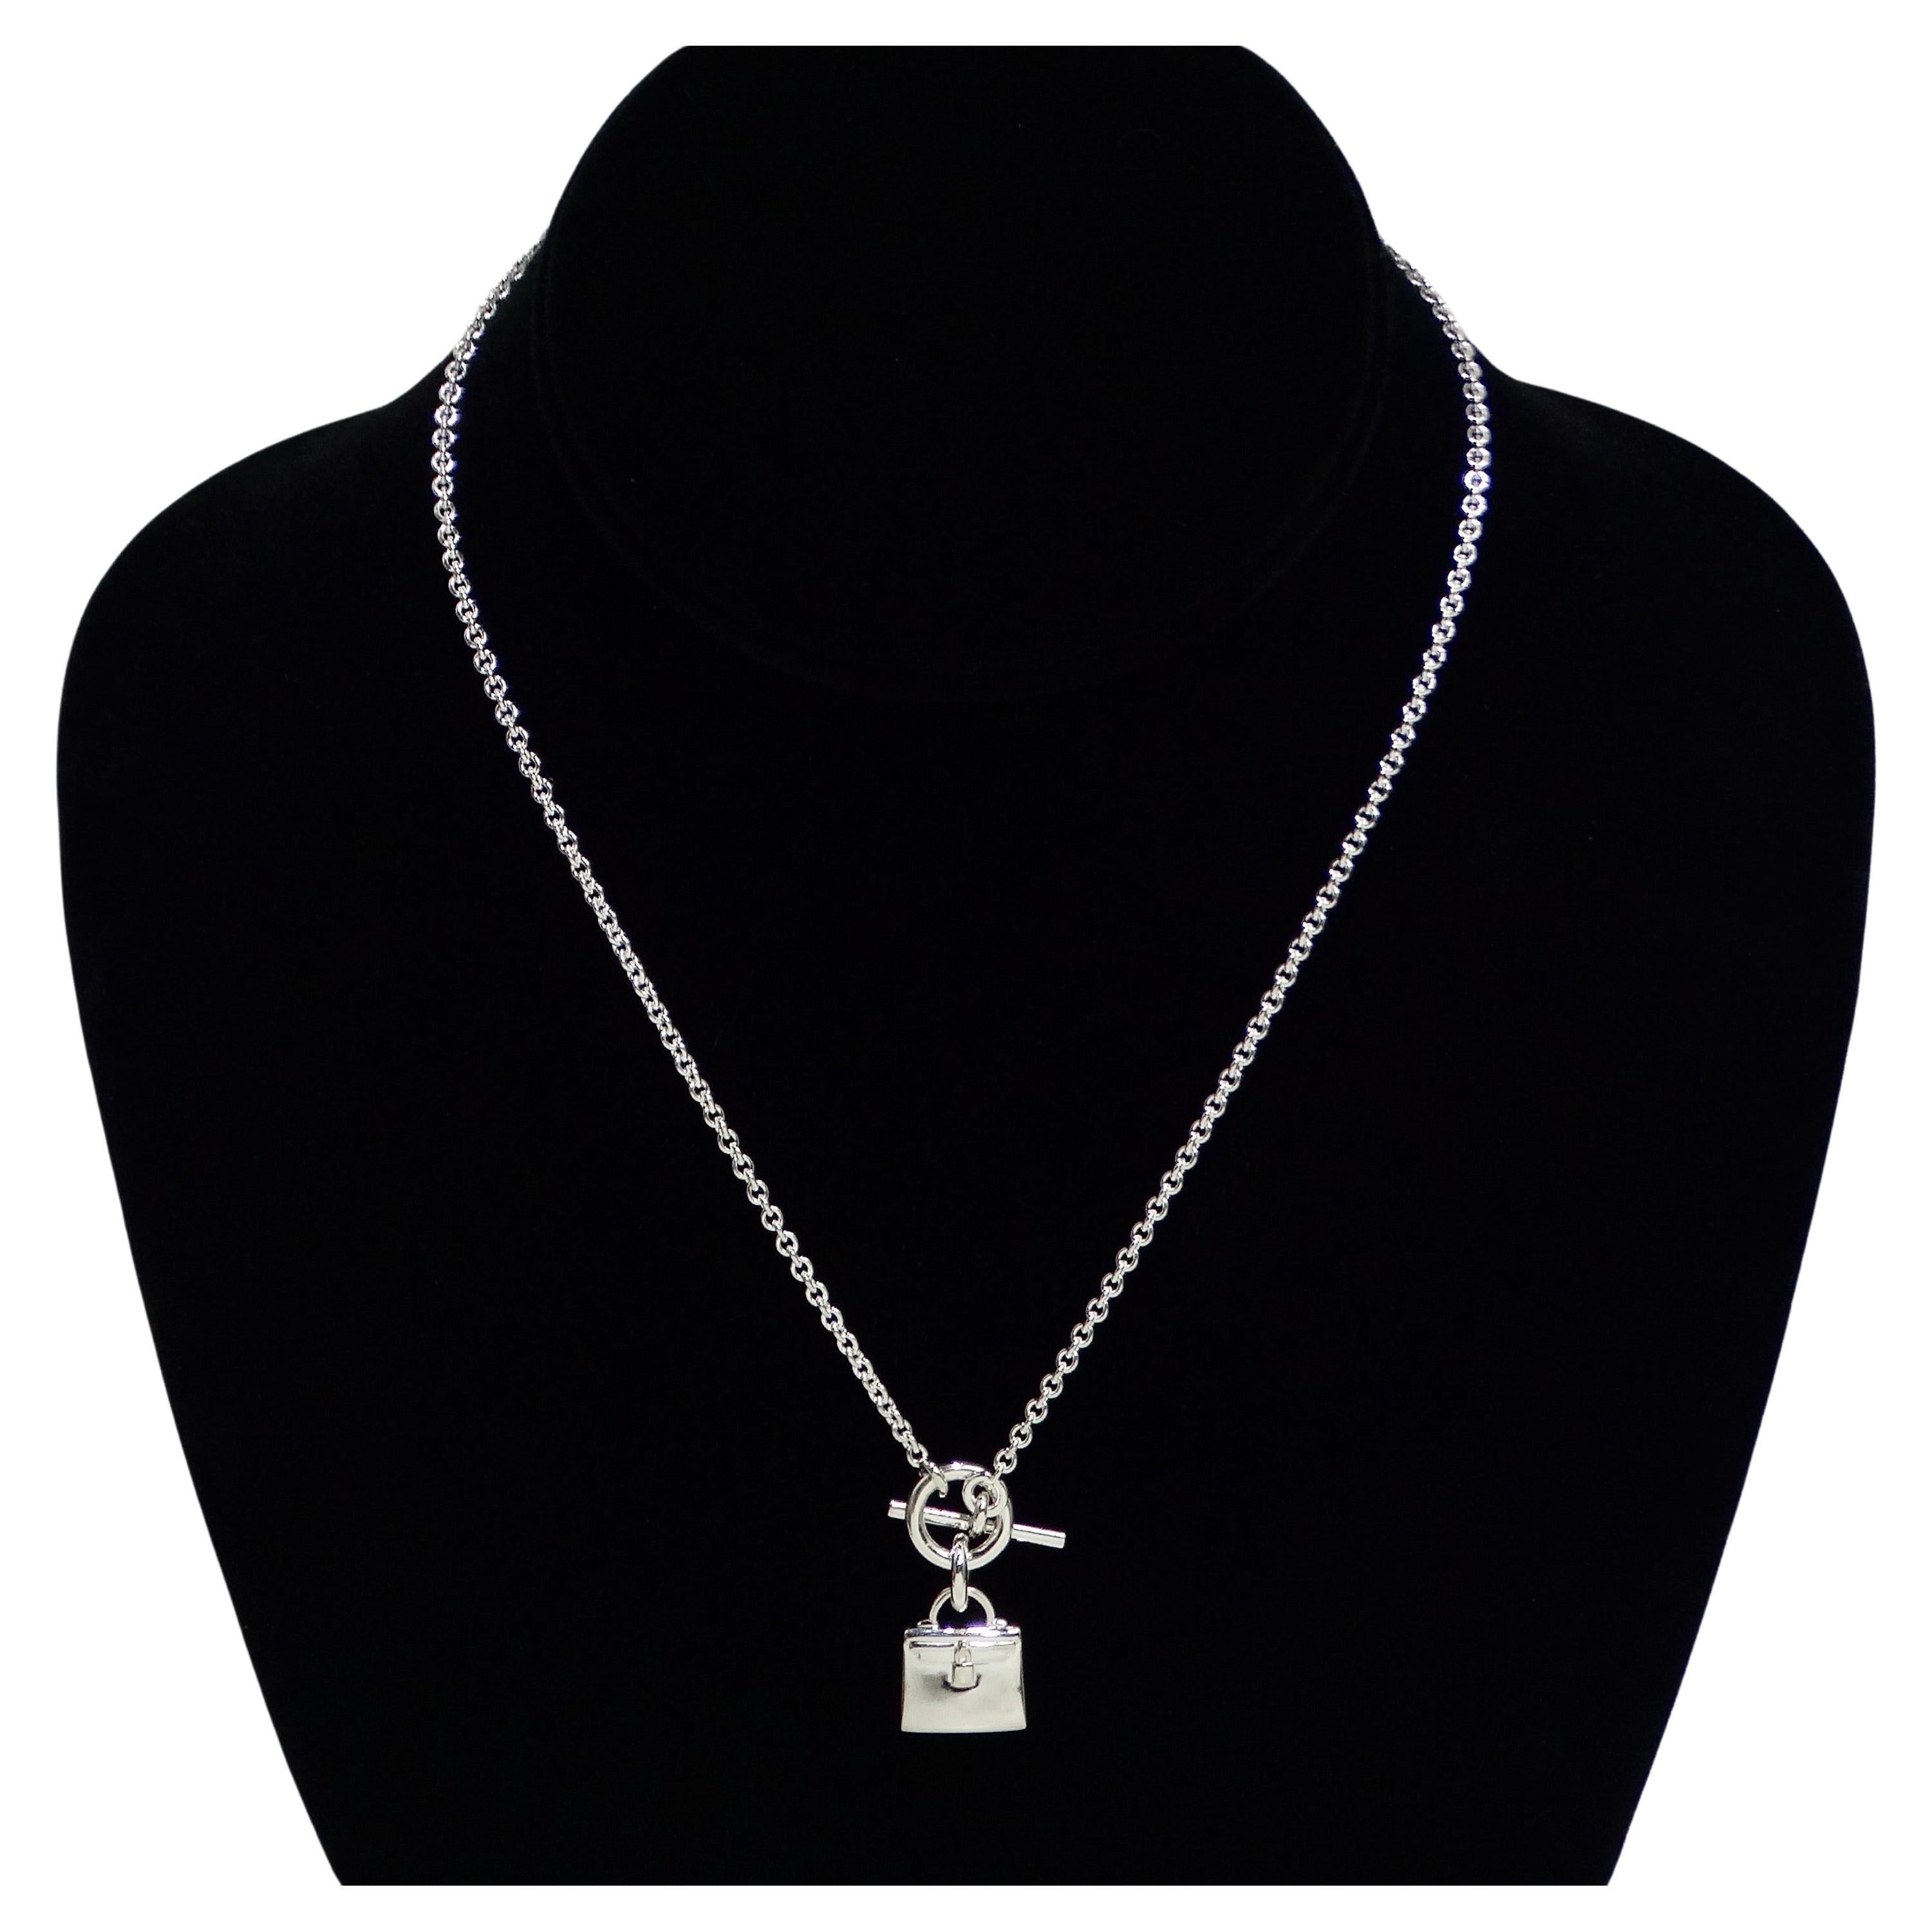 Hermes Amulet 925 Silver Kelly Pendant Necklace